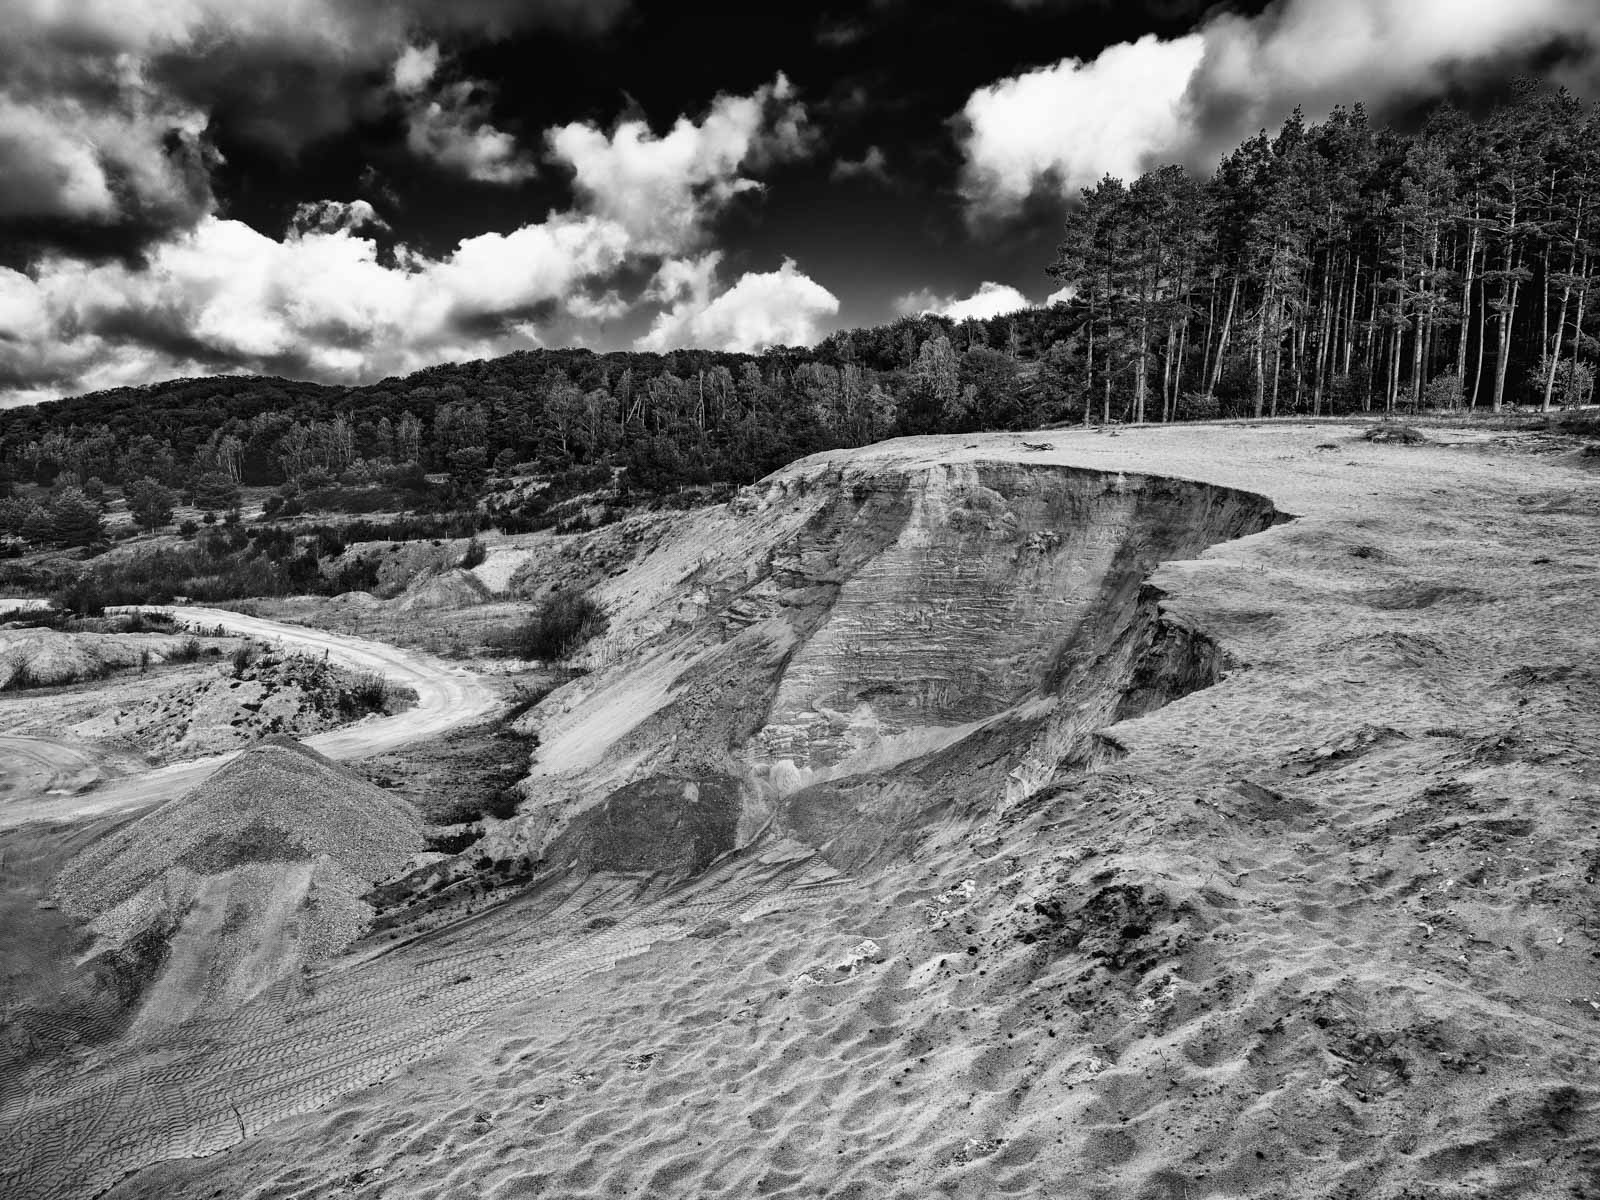 Sand pit at ' Wistinghauser Senne' in September 2020 (Oerlinghausen, Germany).